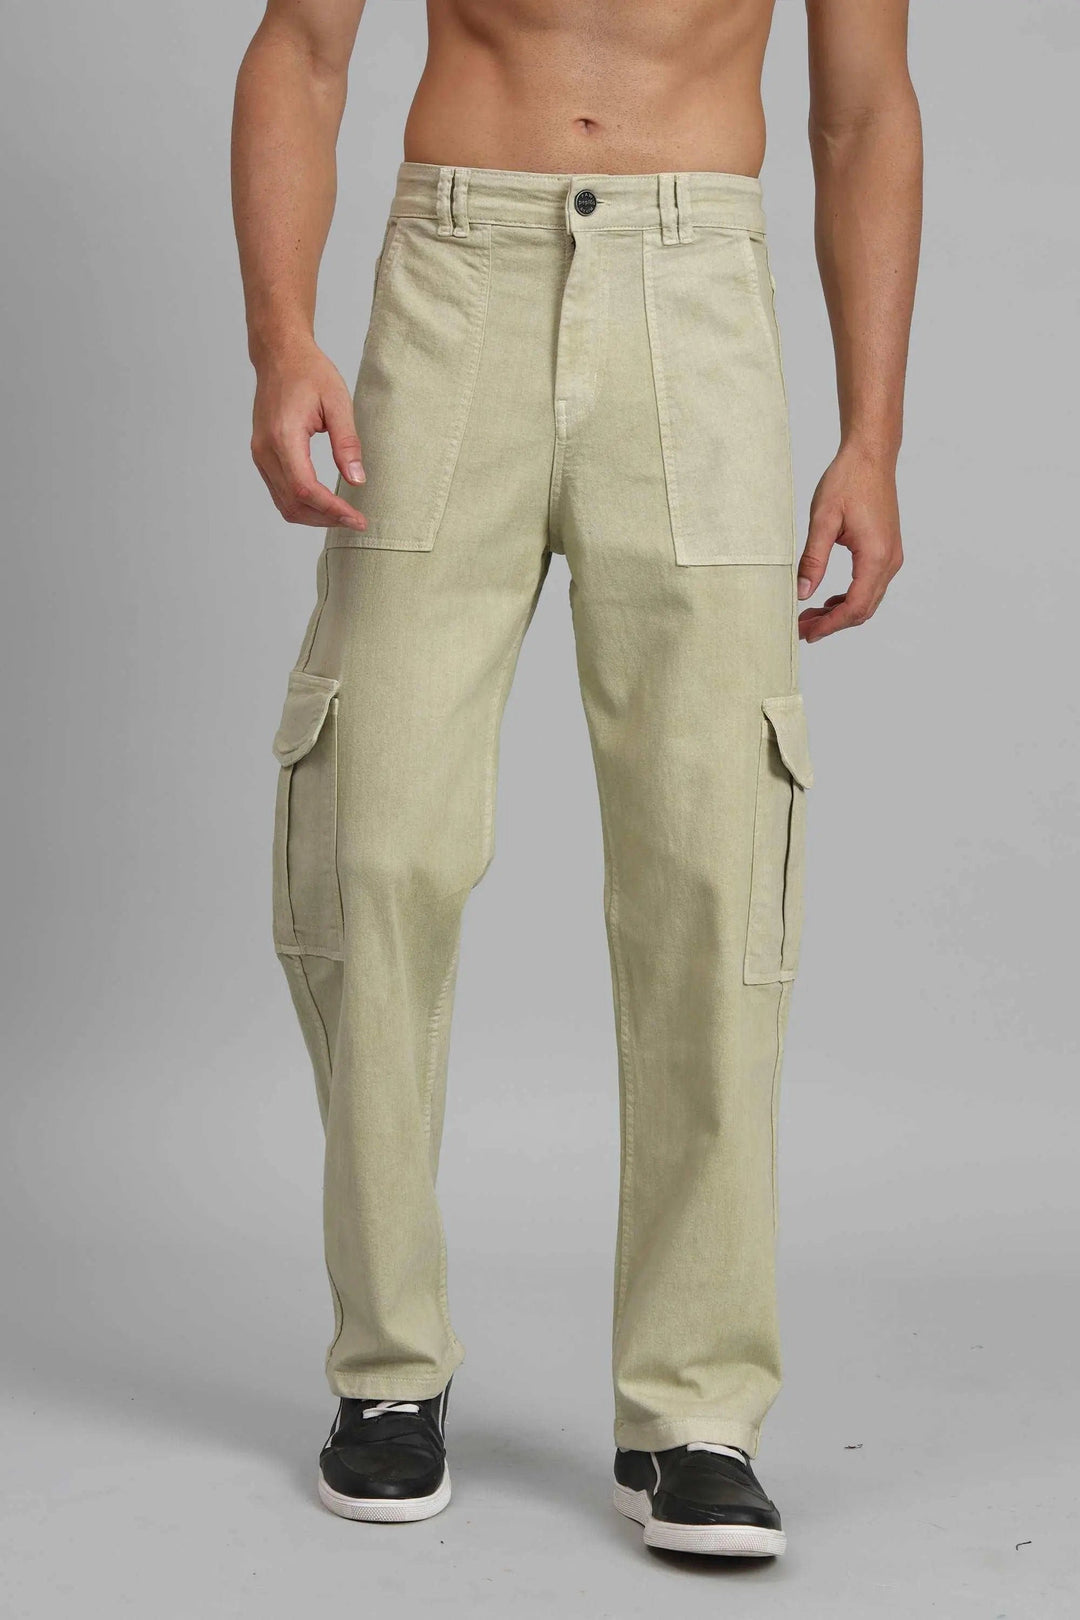 Men's Loose Fit Multiple Pocket Grey Denim Cargo Pant - Peplos